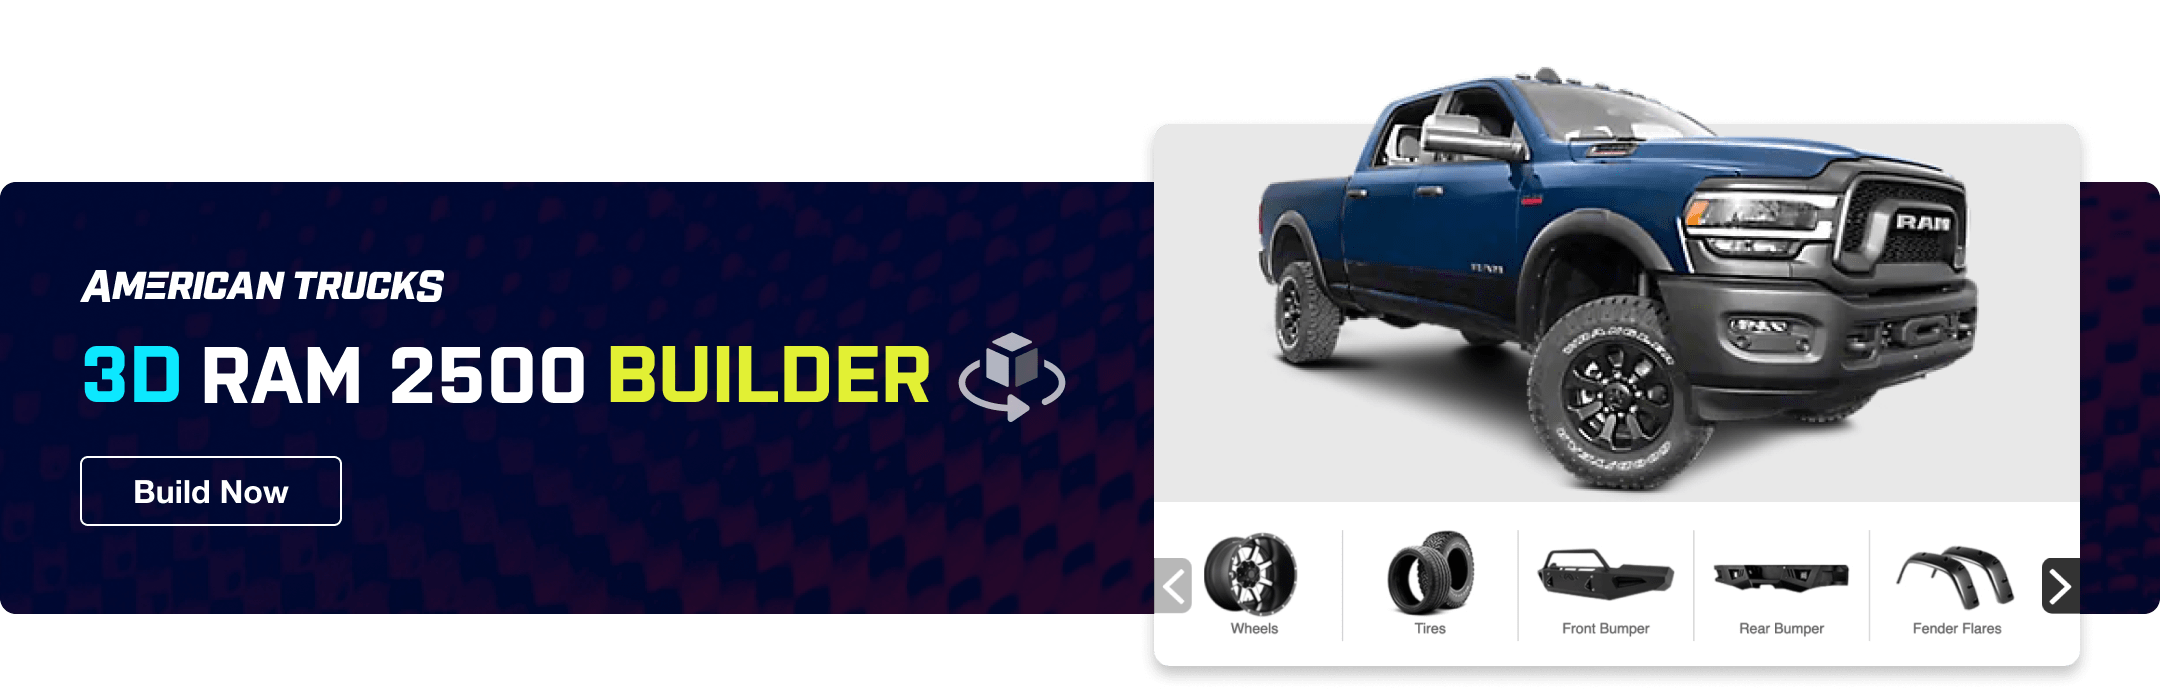 Ram2500 Builder